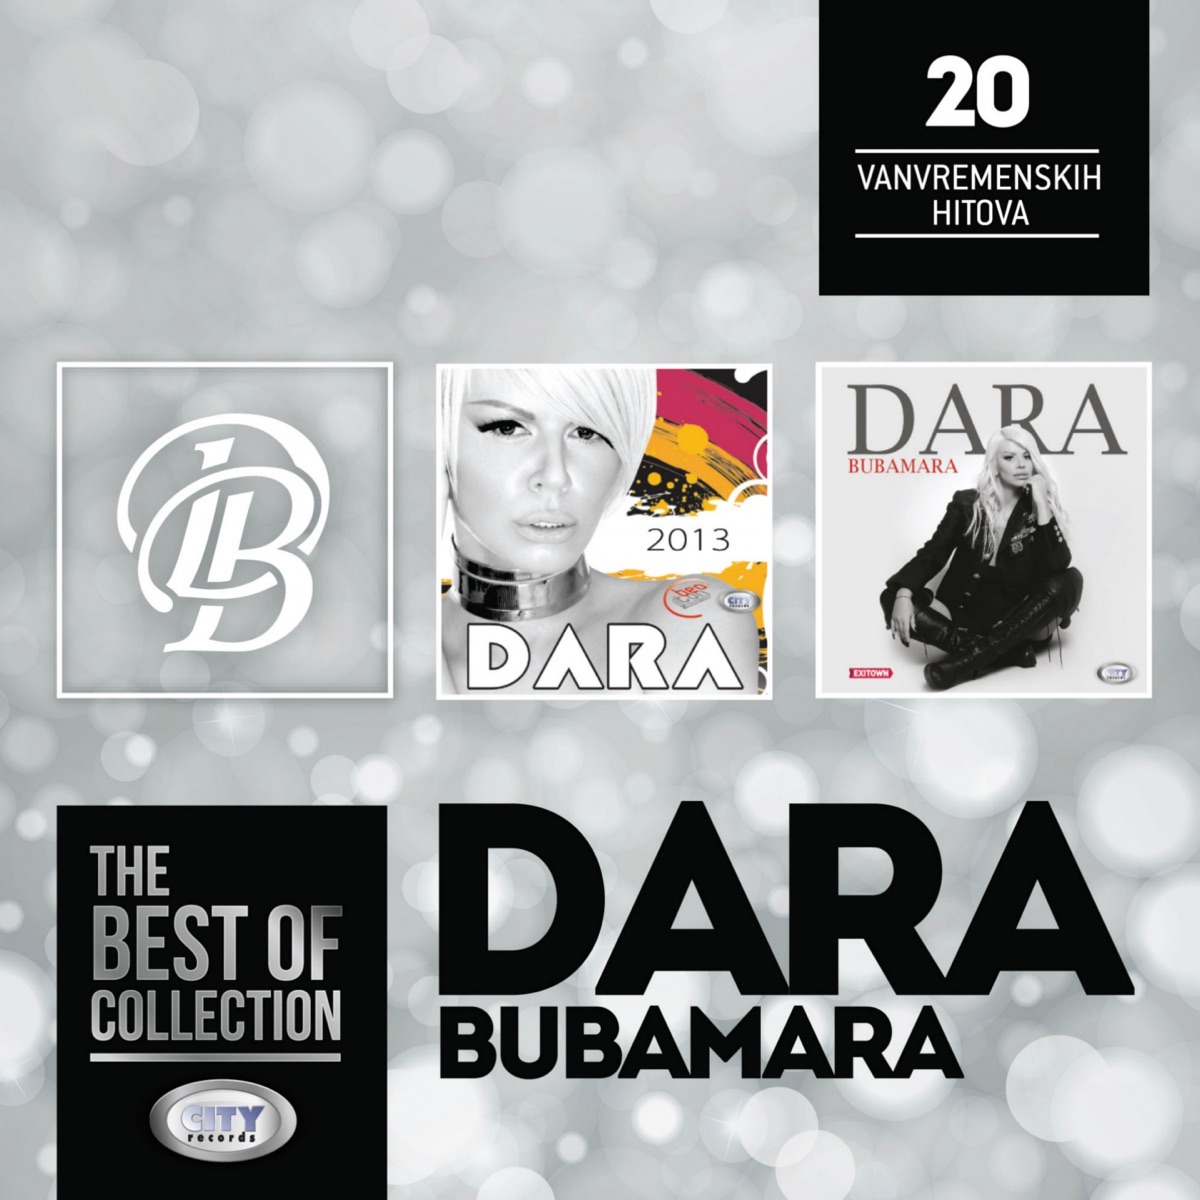 Dara Bubamara - Album by Dara Bubamara & Grand Production - Apple Music